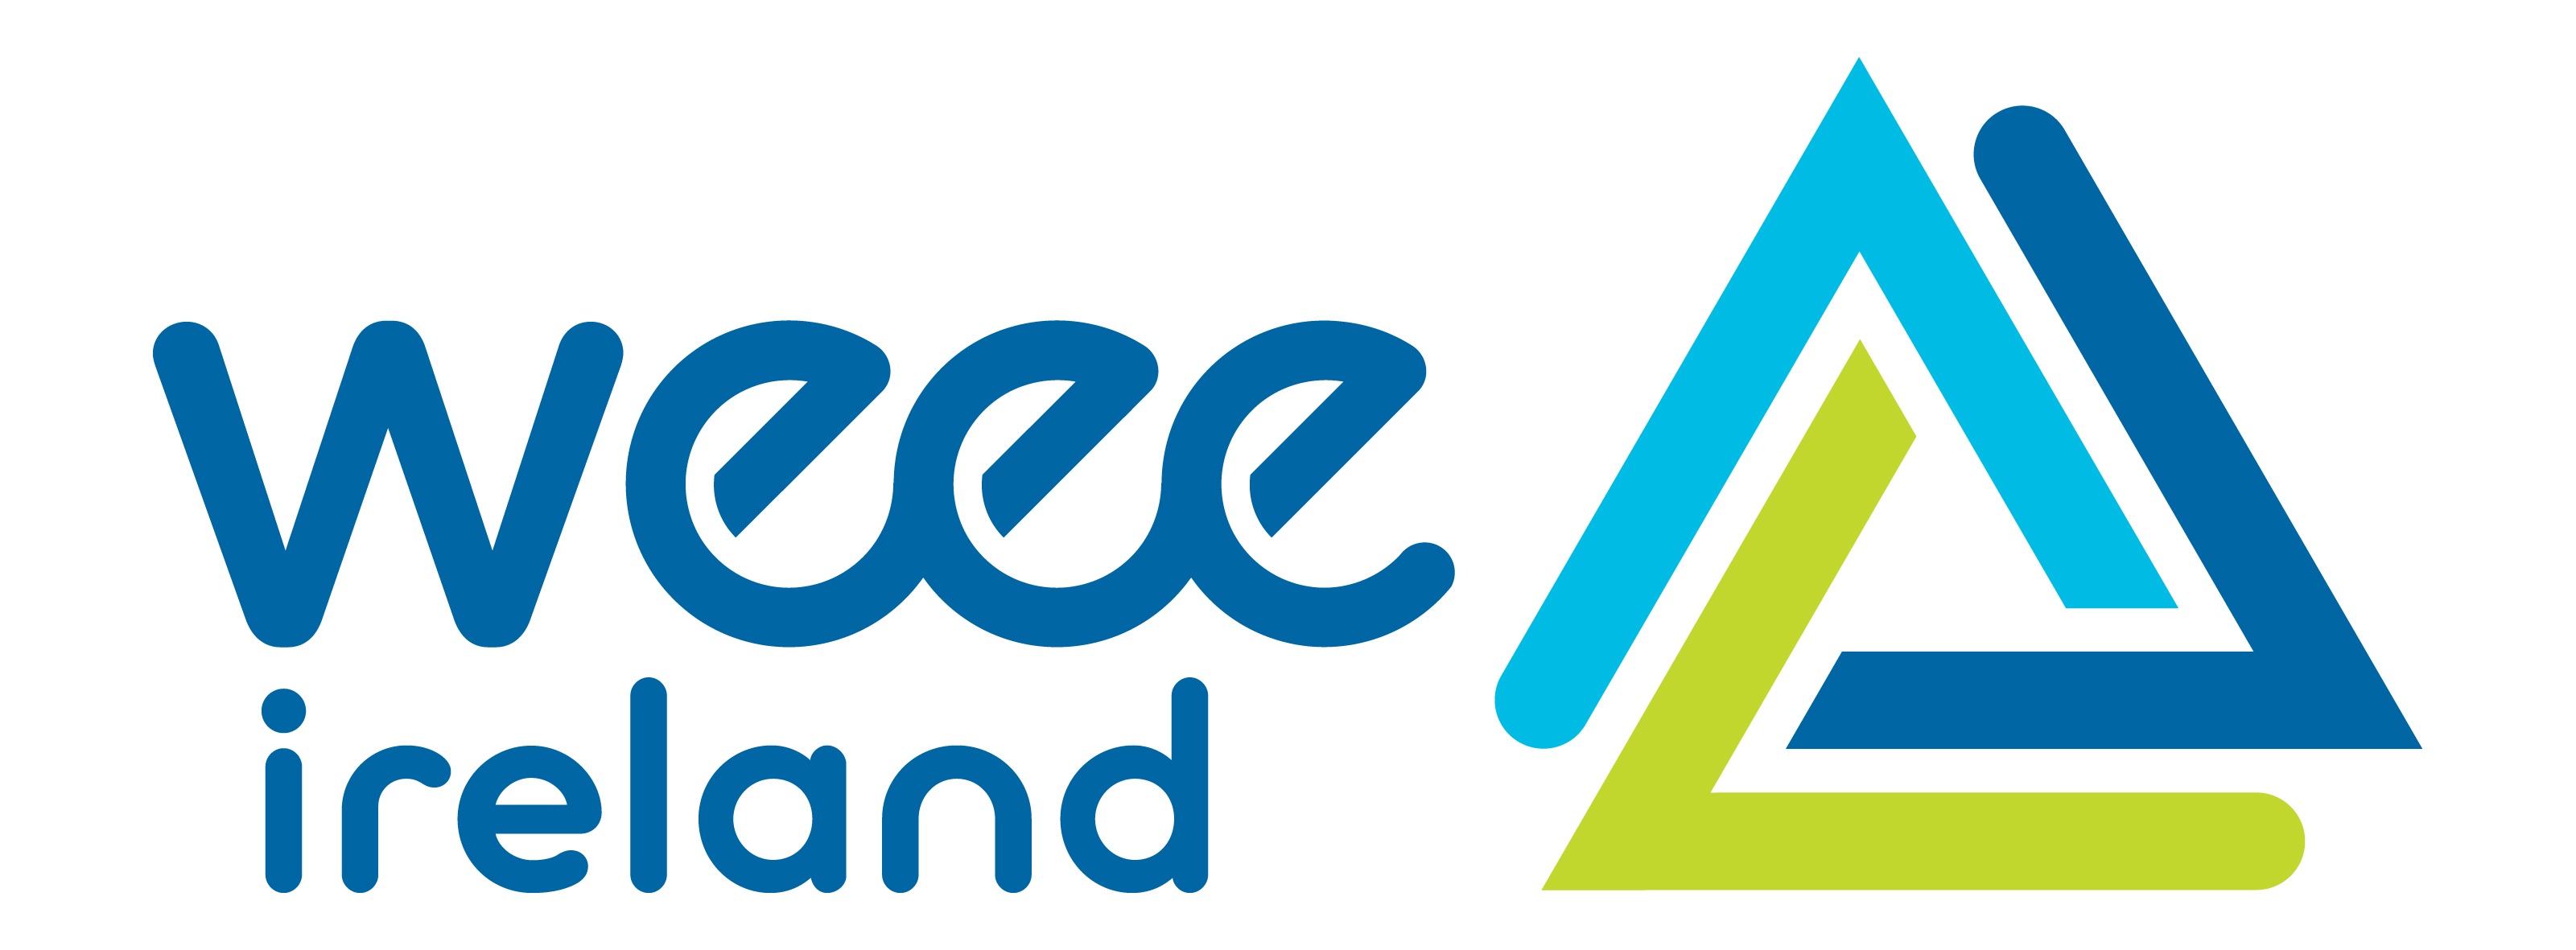 WEEE-logo-standard-21